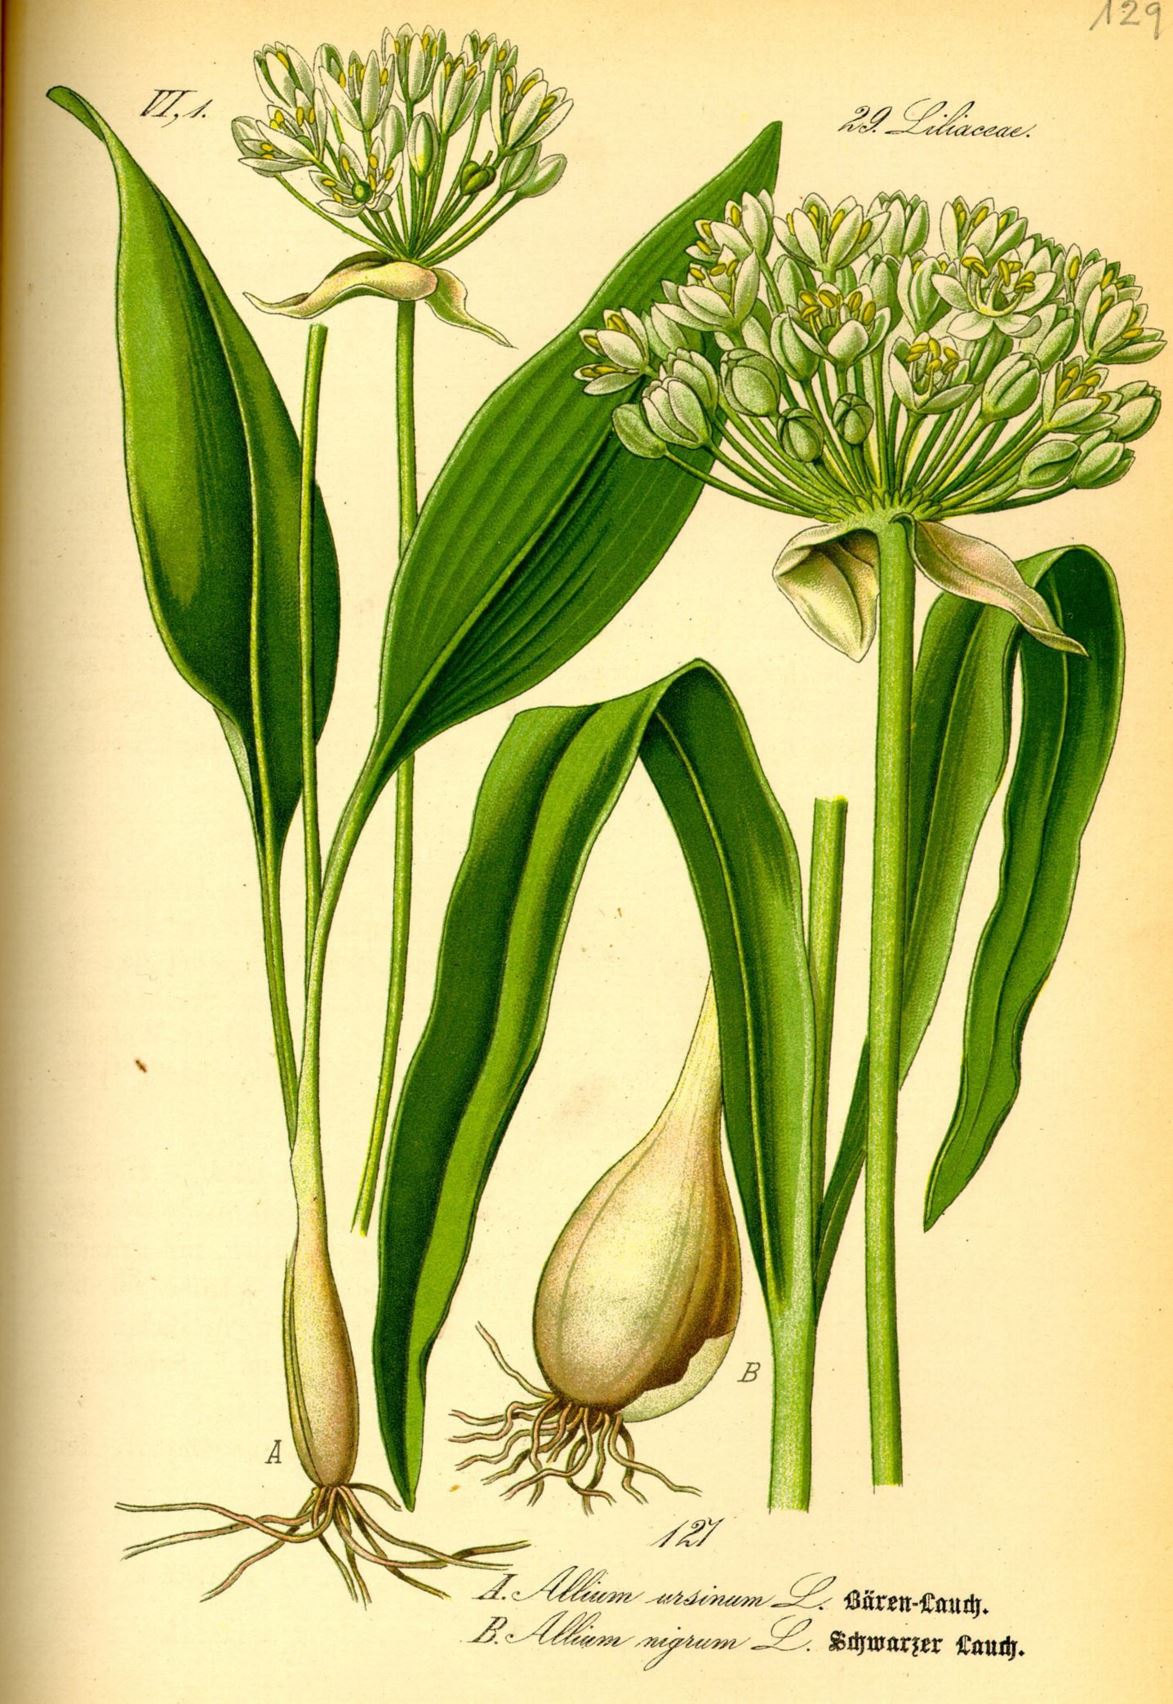 Allium ursinum - Daslook, Ramsons, Wild garlic, Wood garlic